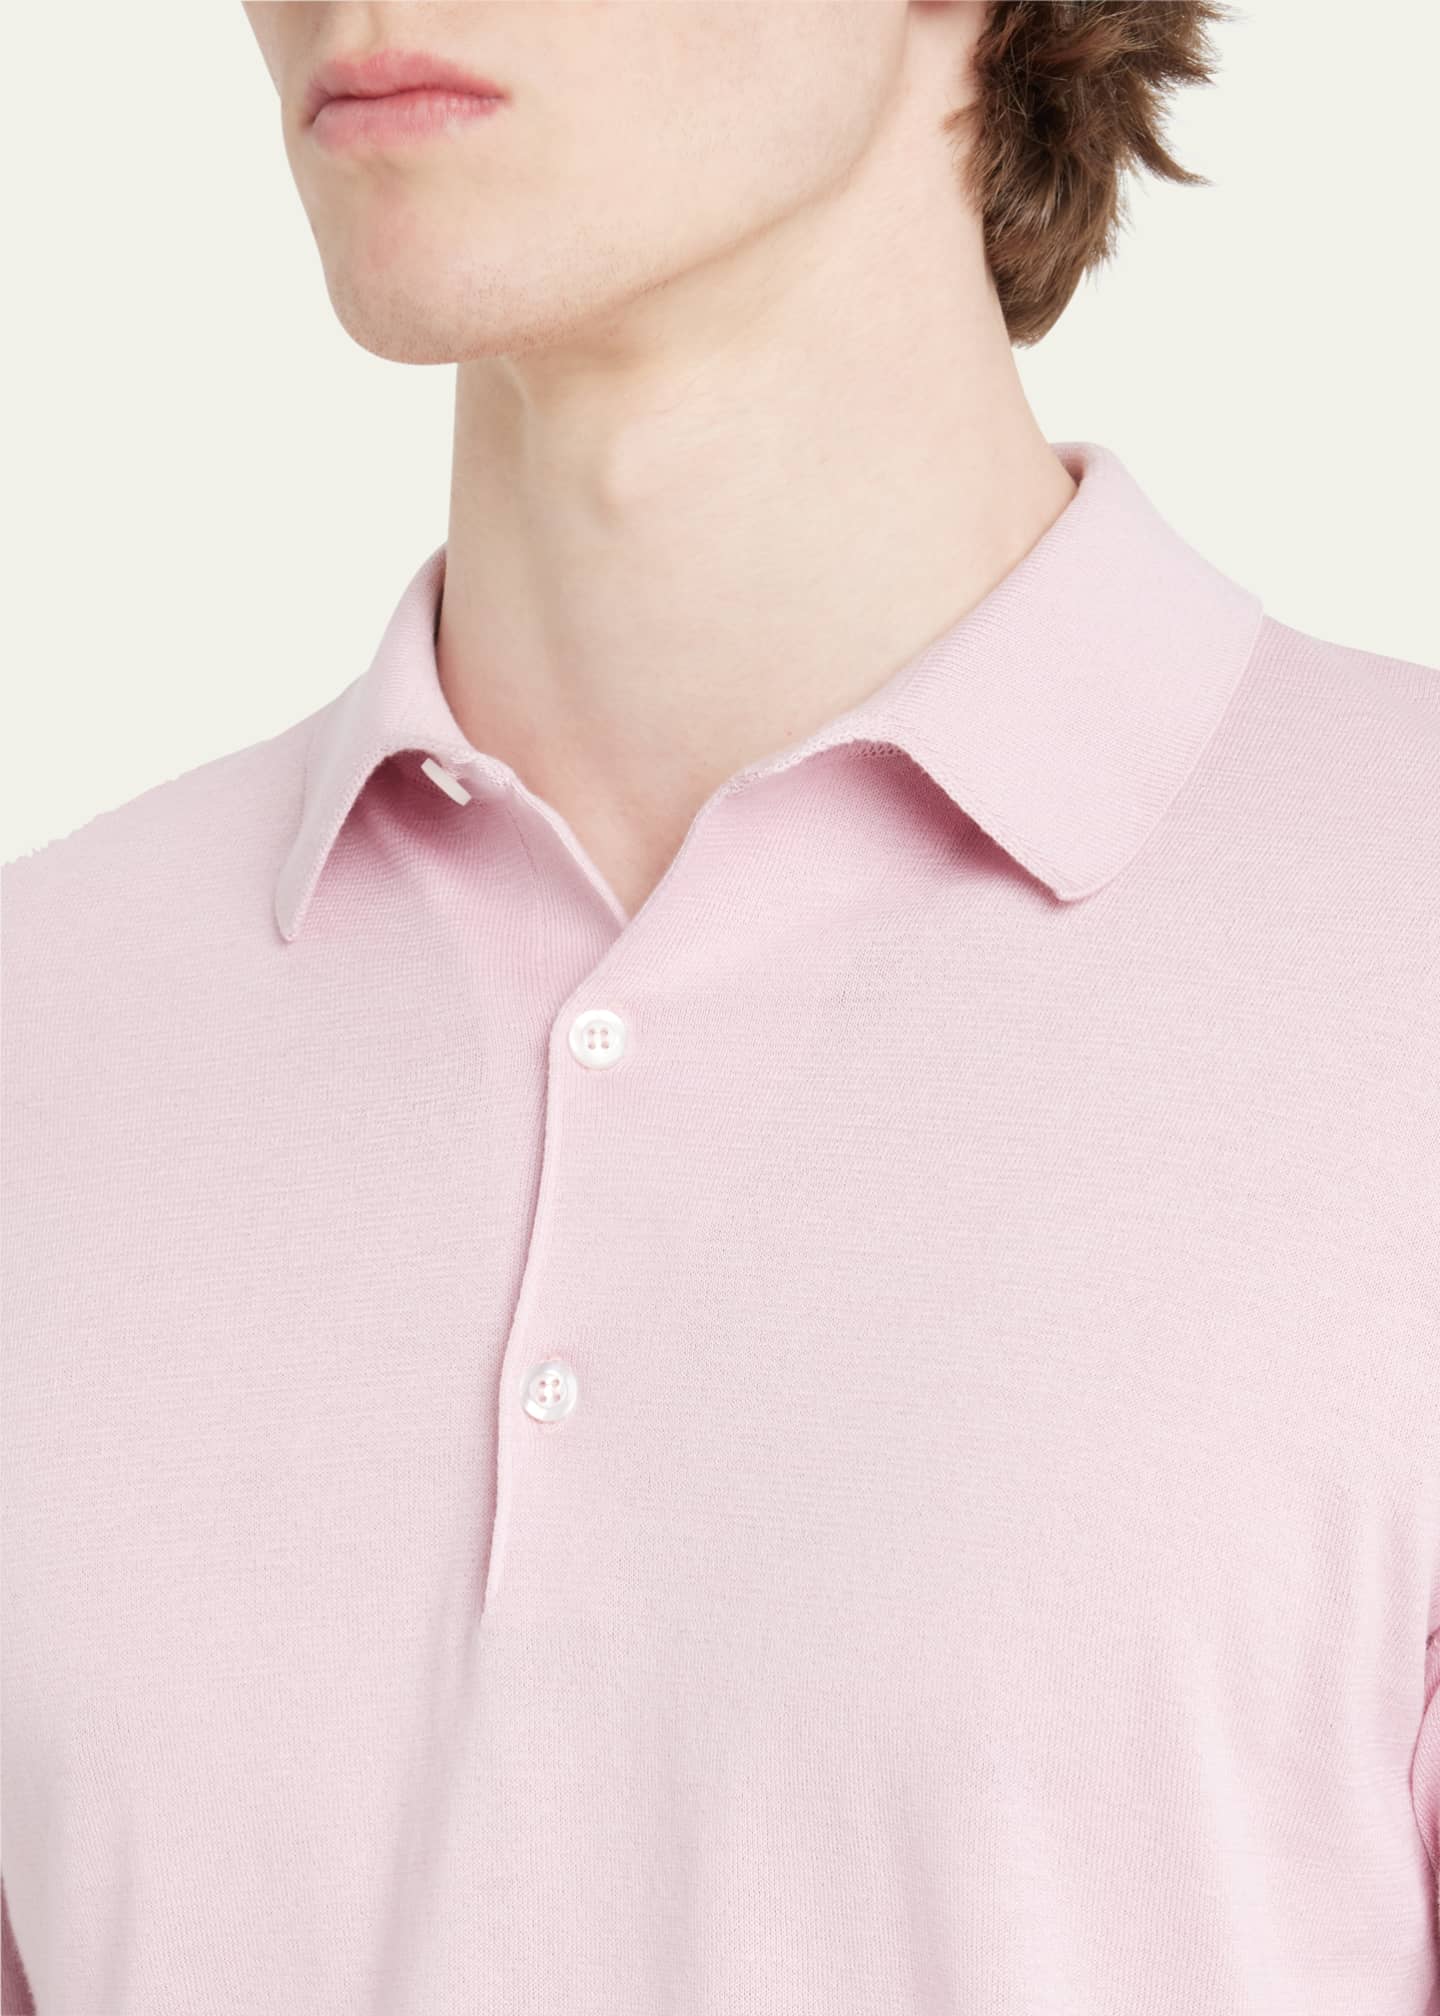 John Smedley Men's Adrian Polo Shirt - Bergdorf Goodman